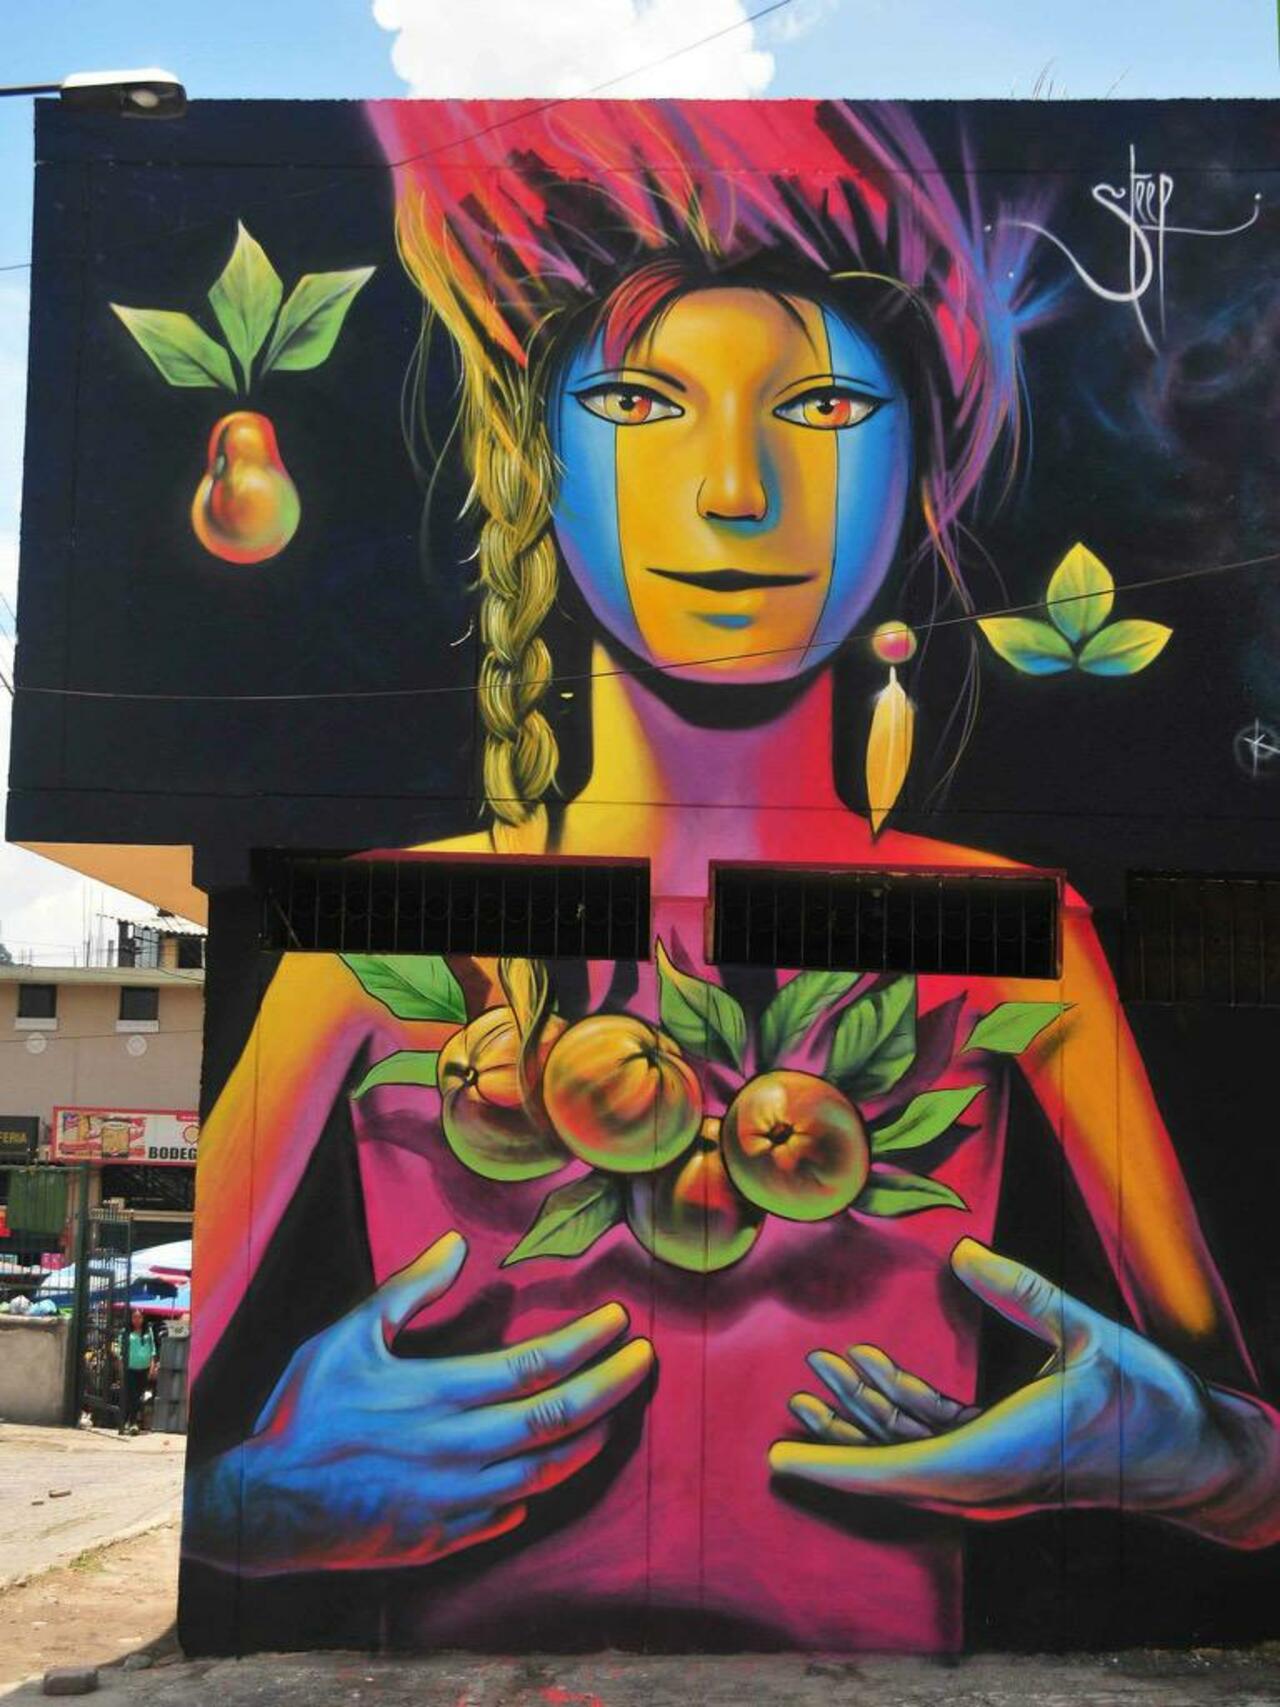 RT GoogleStreetArt: Street Art by Steep

#art #graffiti #mural #streetart http://t.co/c1xtZK3wWt https://goo.gl/t4fpx2